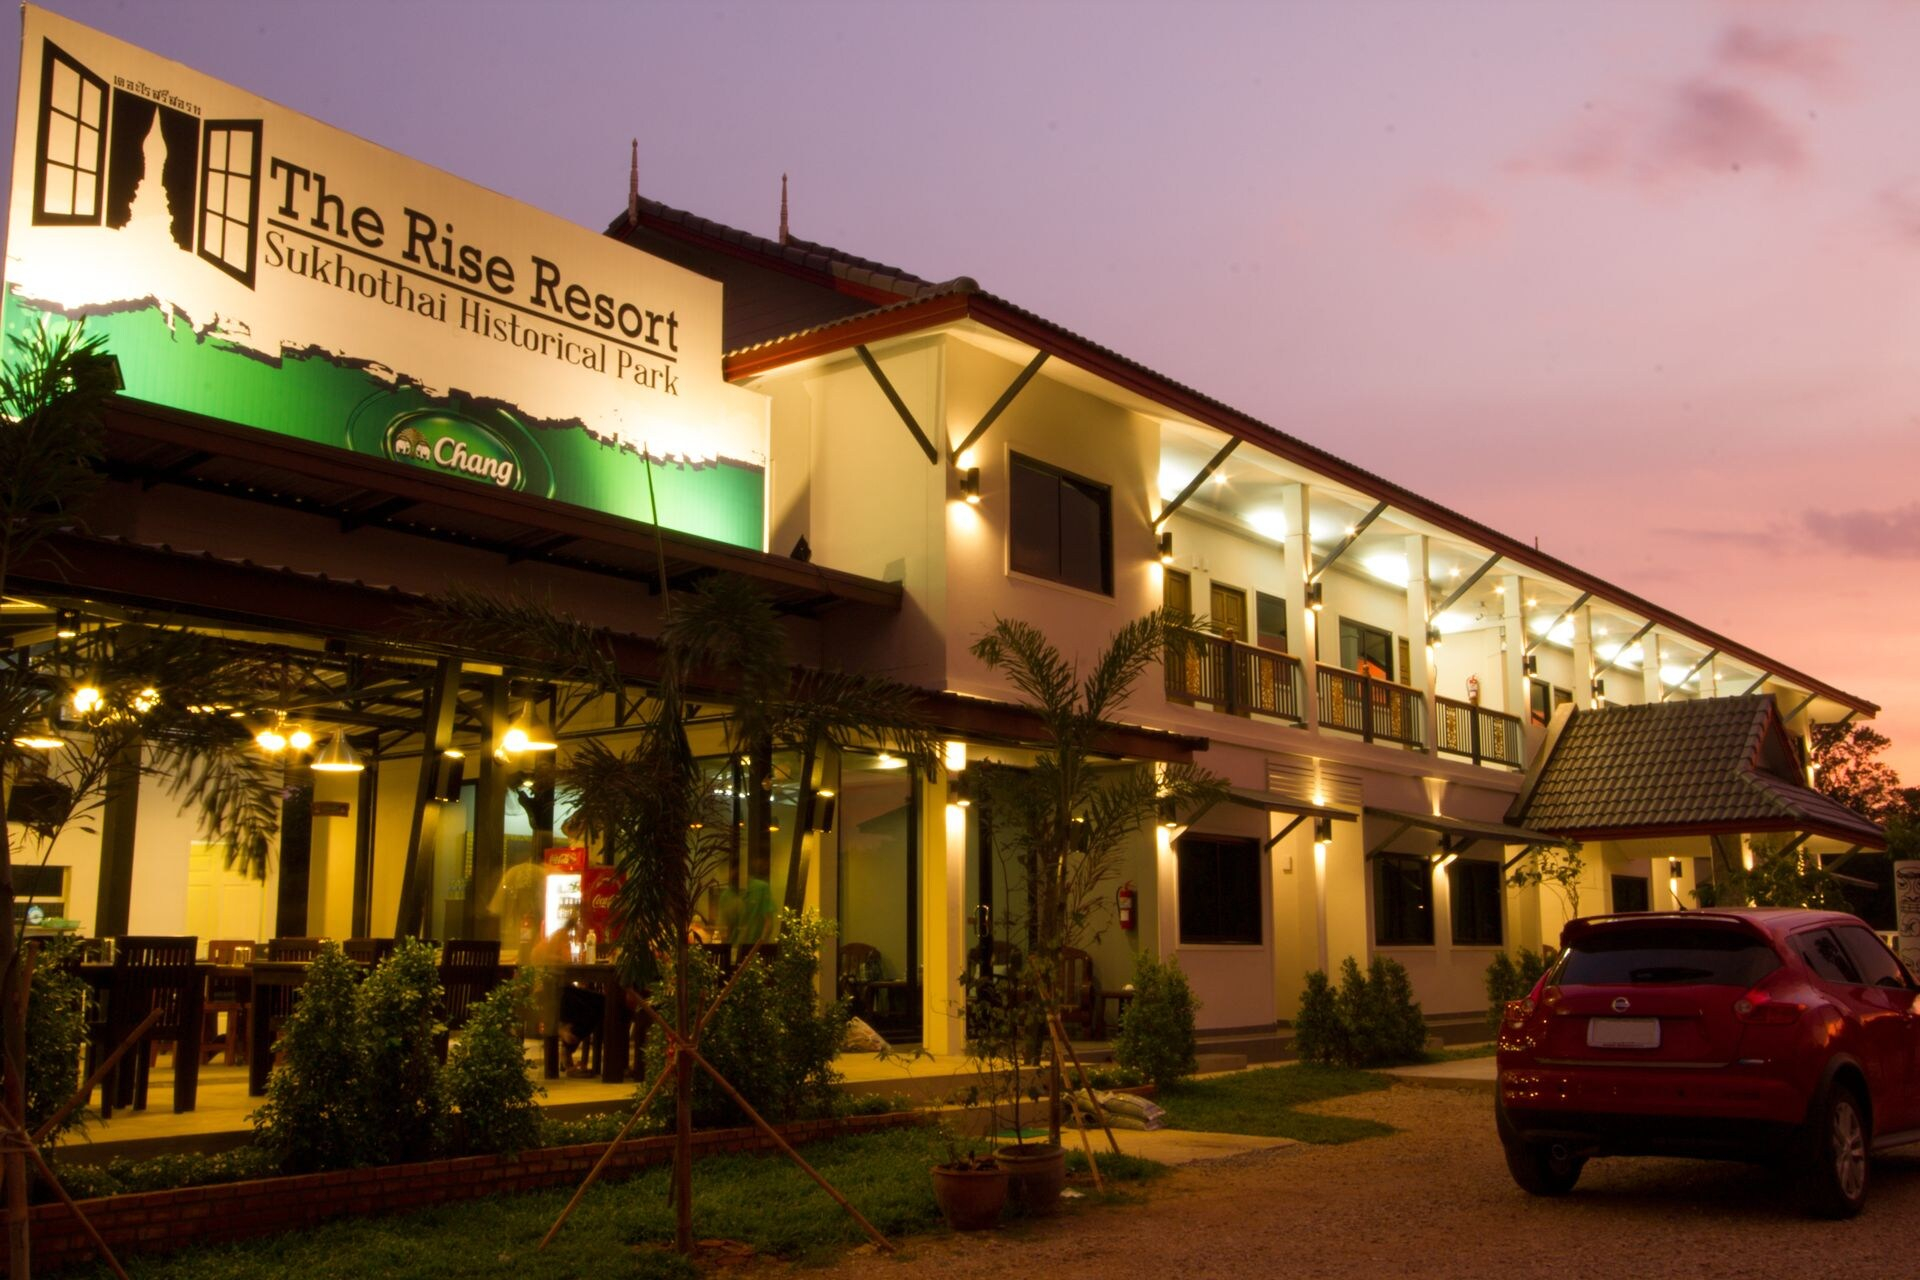 The Rise Resort, Muang Sukhothai